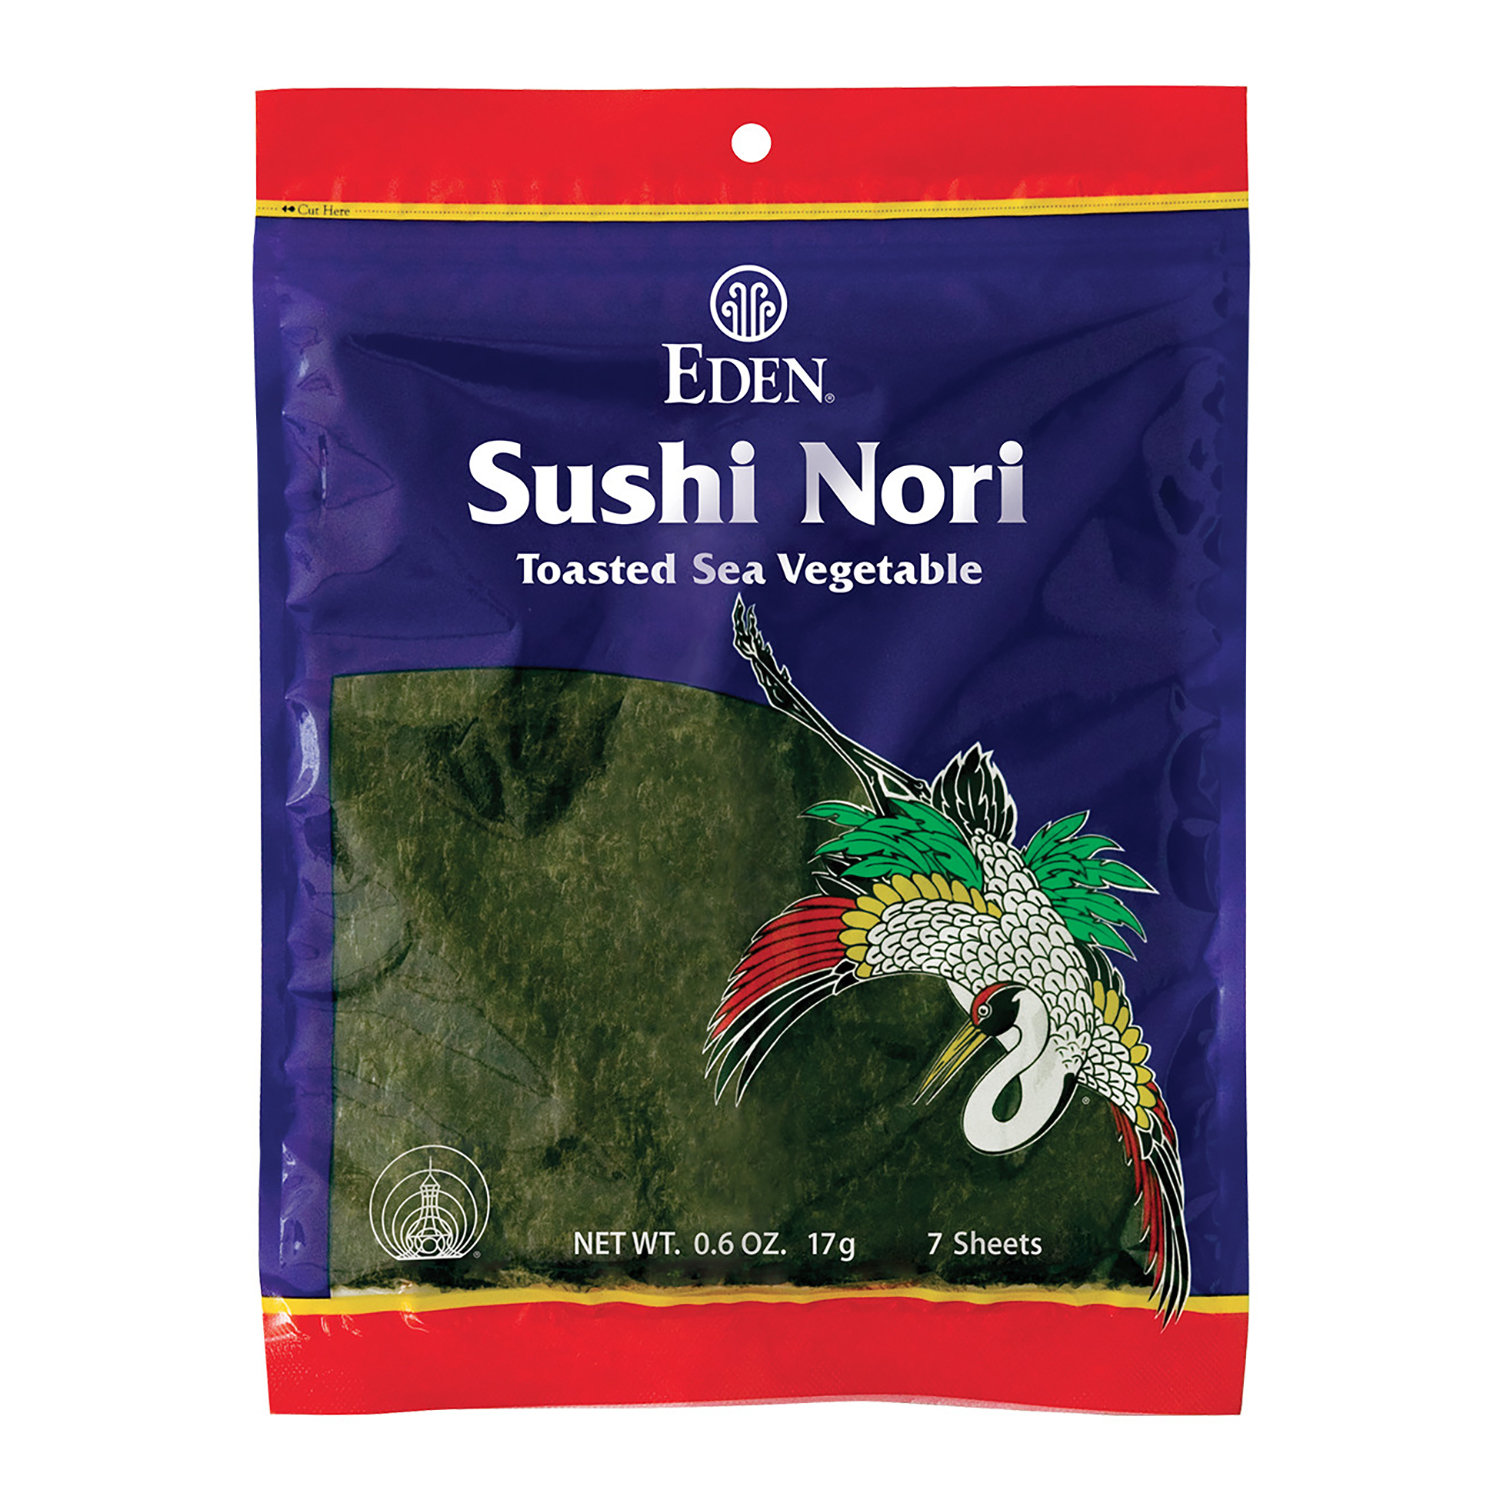 Eden Sushi Nori Toasted Sea Vegetable